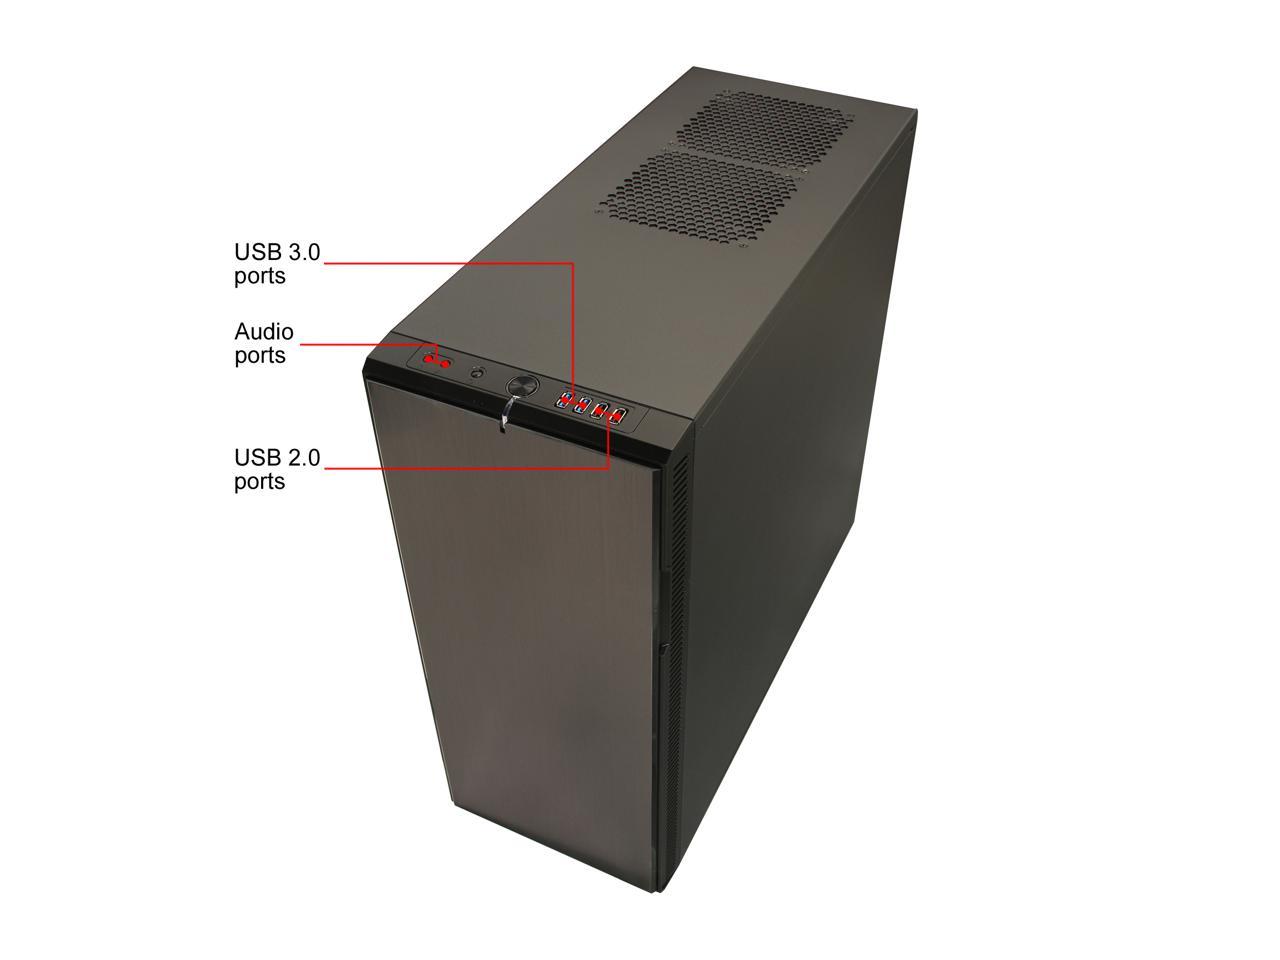 Fractal Design Define Xl R2 Titanium Silent Eatx Full Tower Computer Case Newegg Com